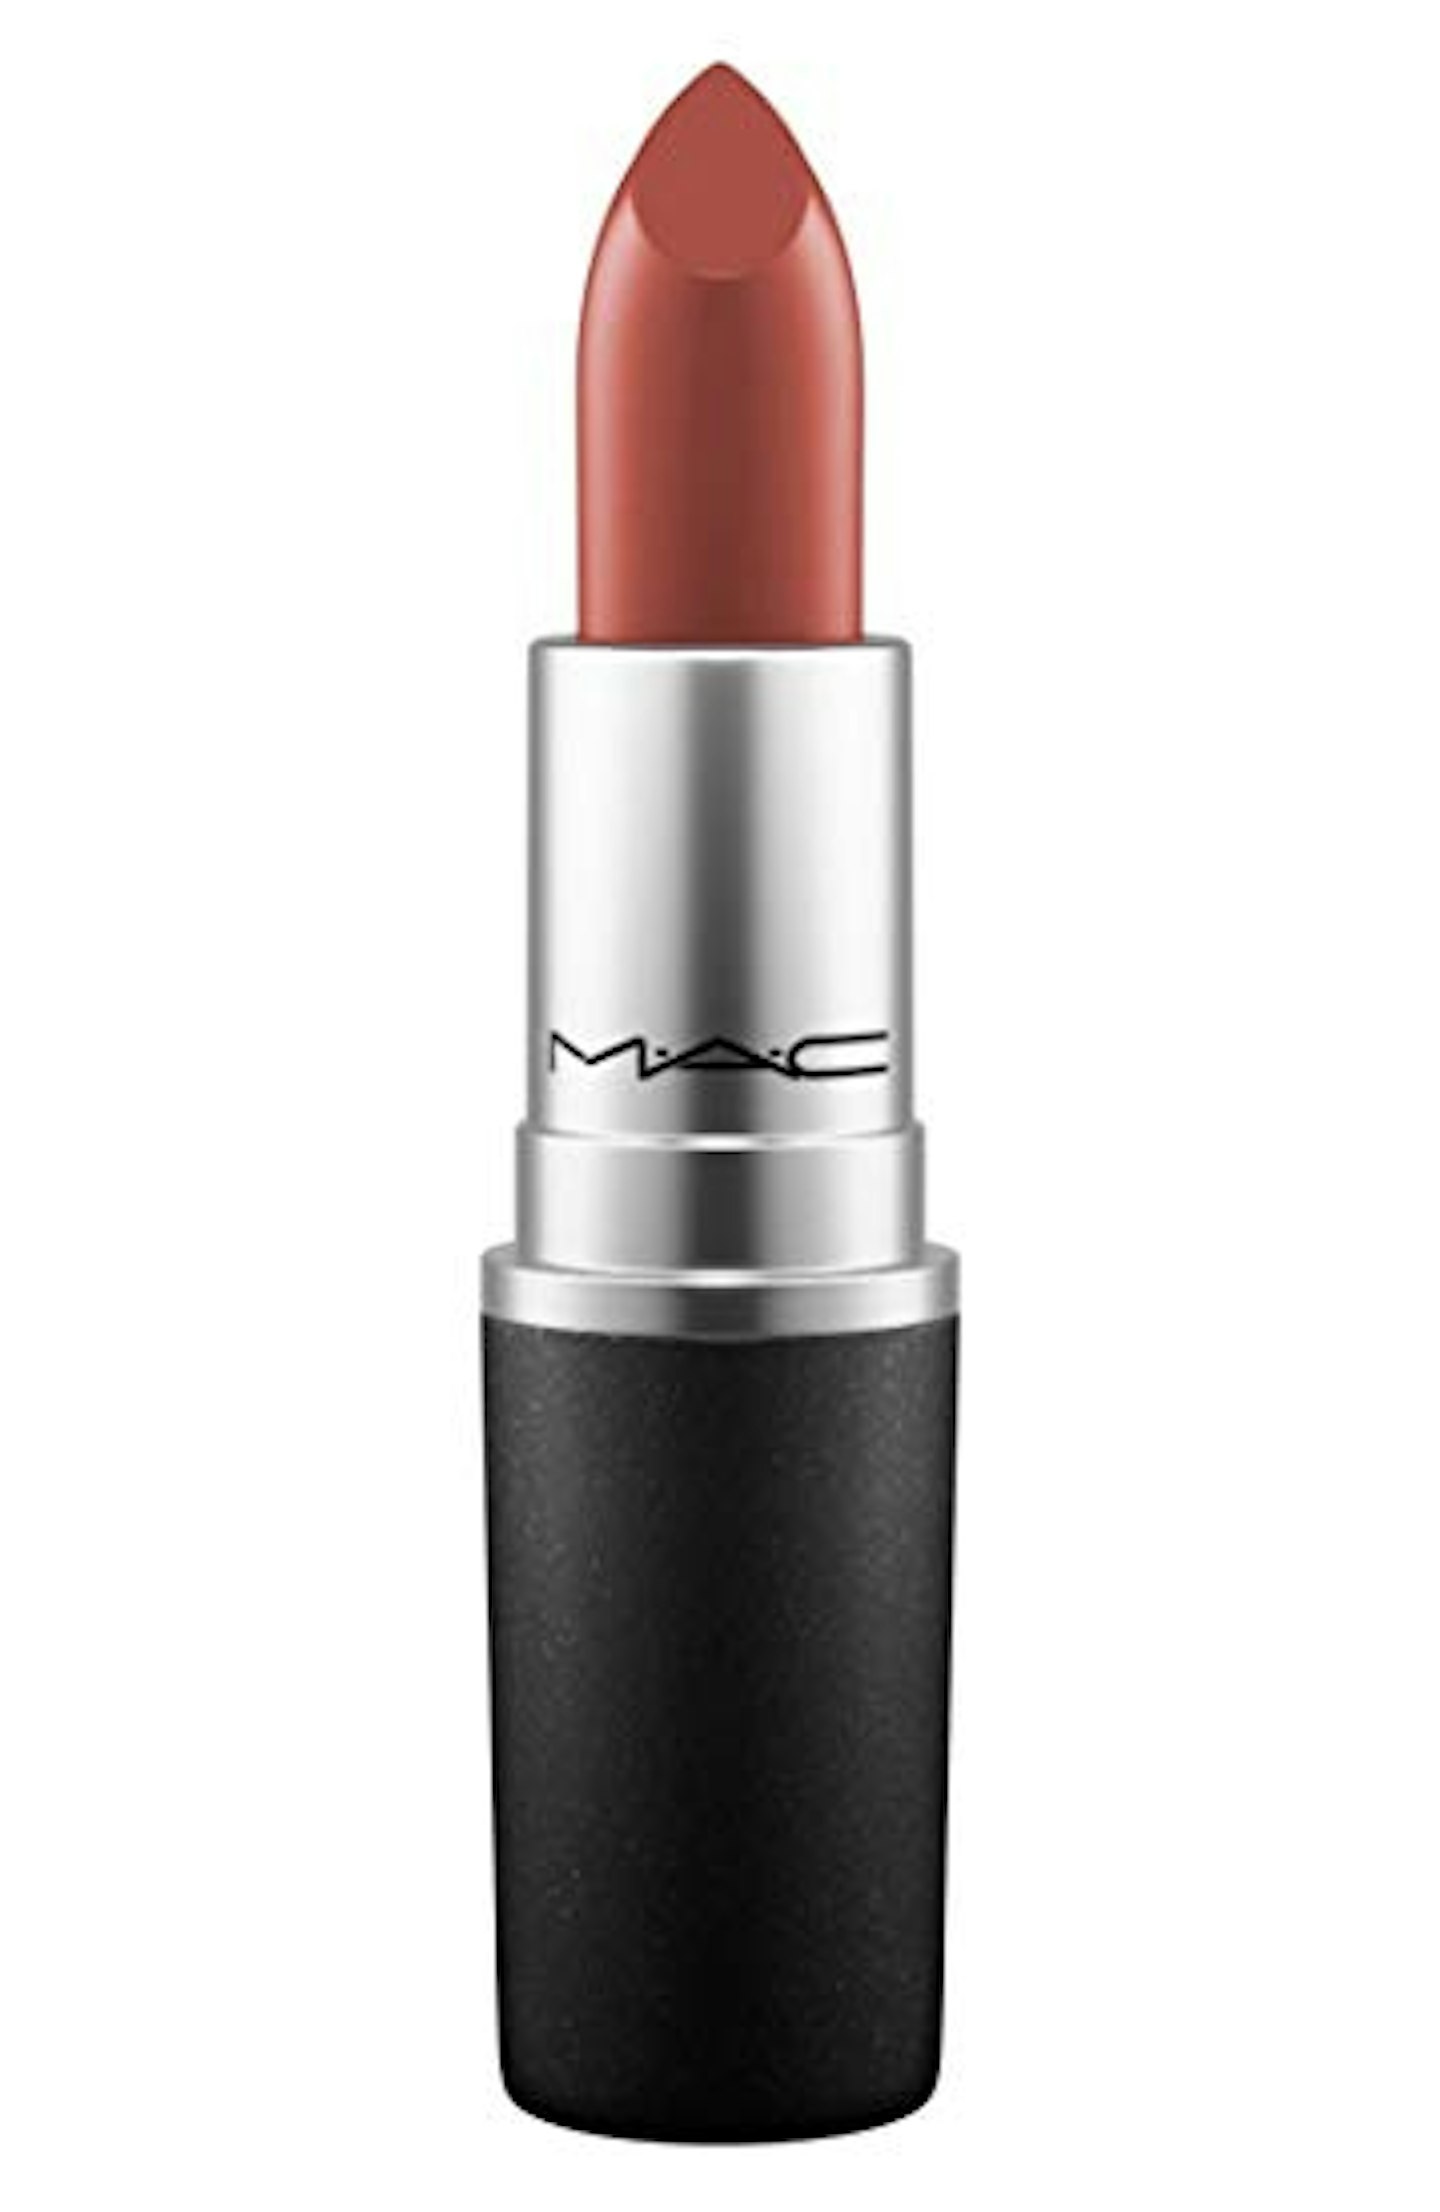 MAC Satin Lipstick in Paramount, £17.50